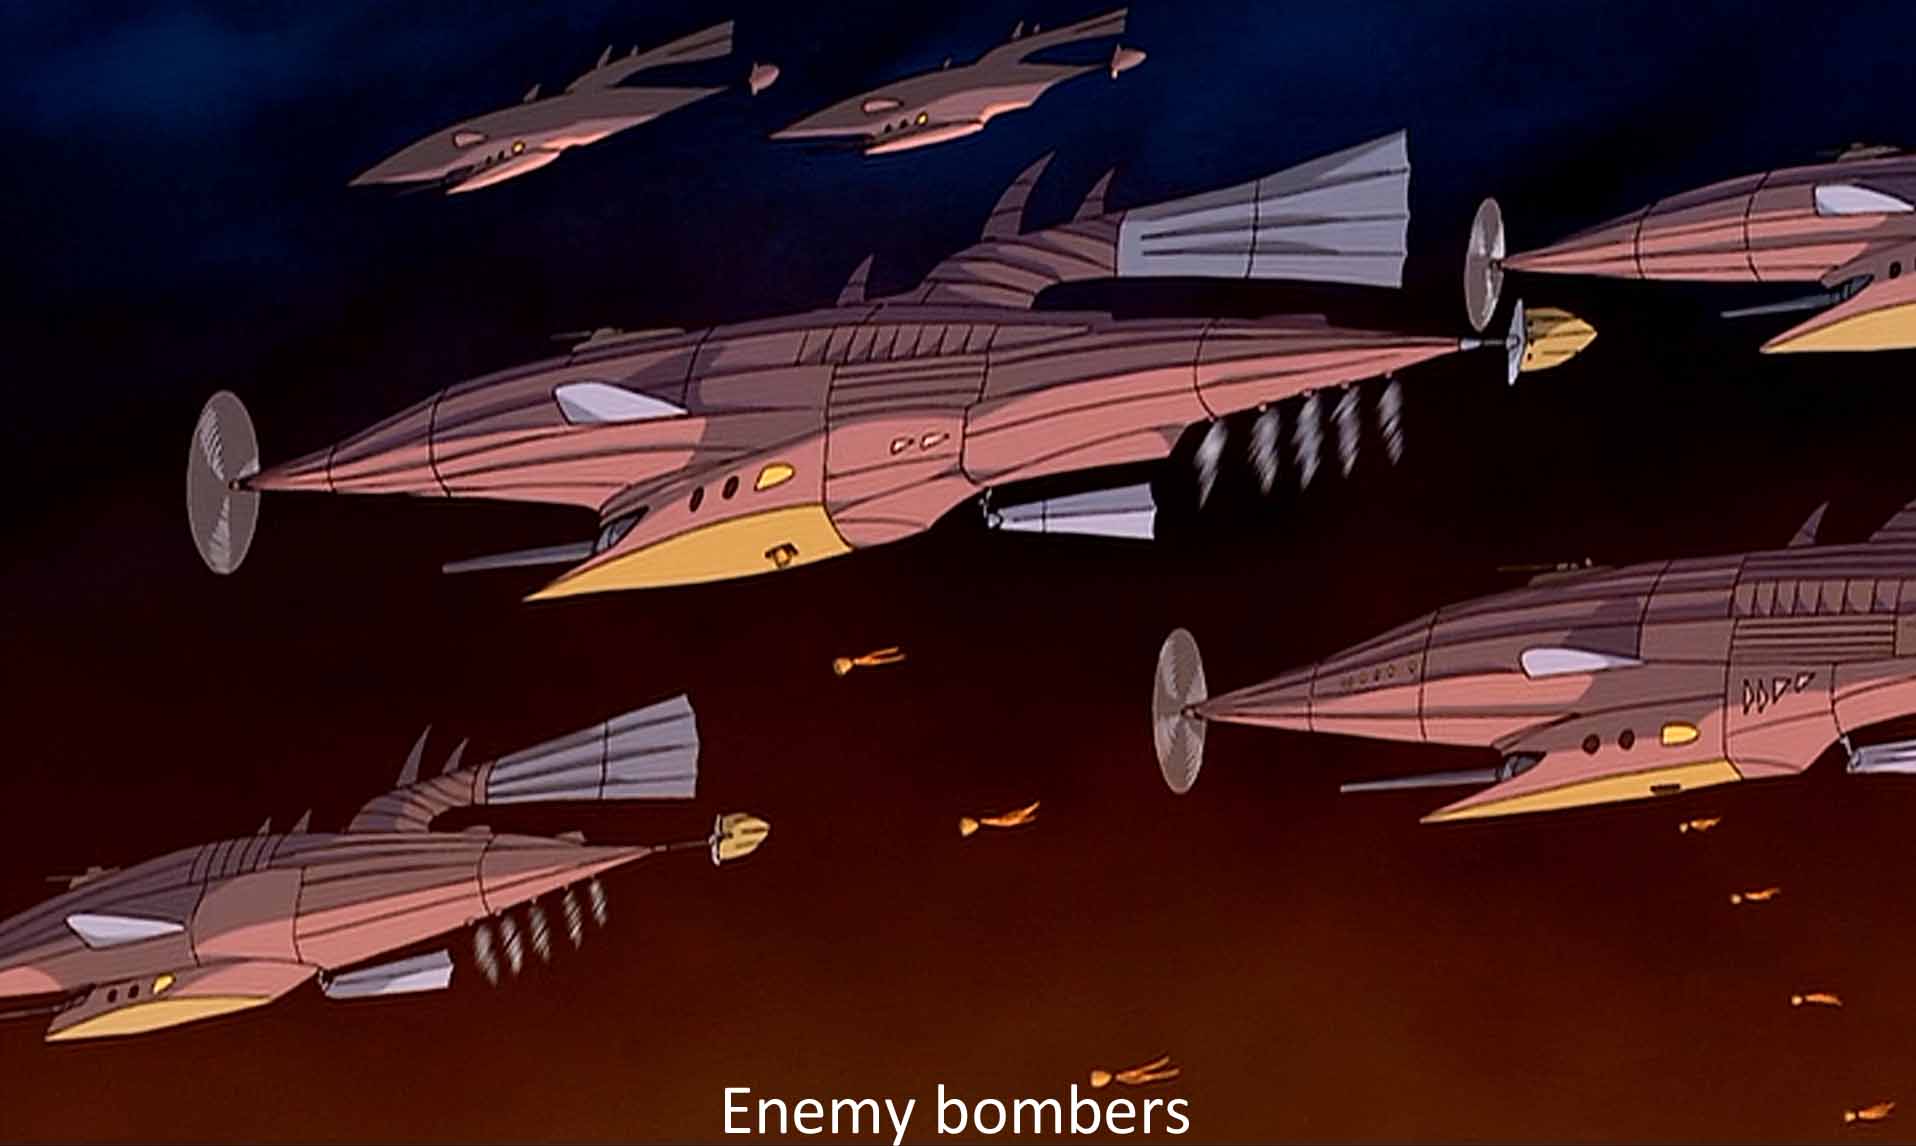 Enemy bombers